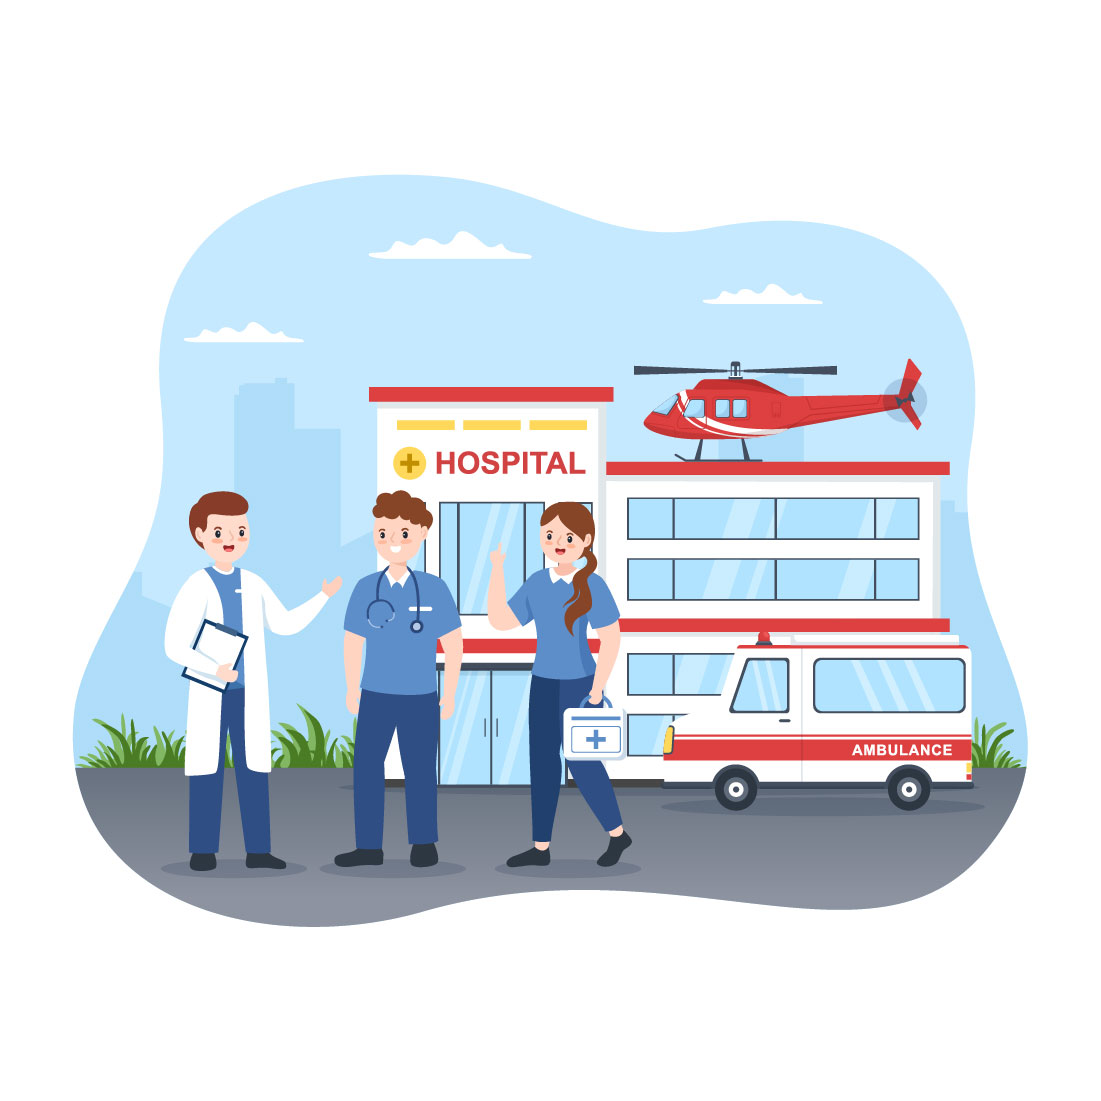 Cartoon Medical Vehicle Ambulance Car Design cover image.